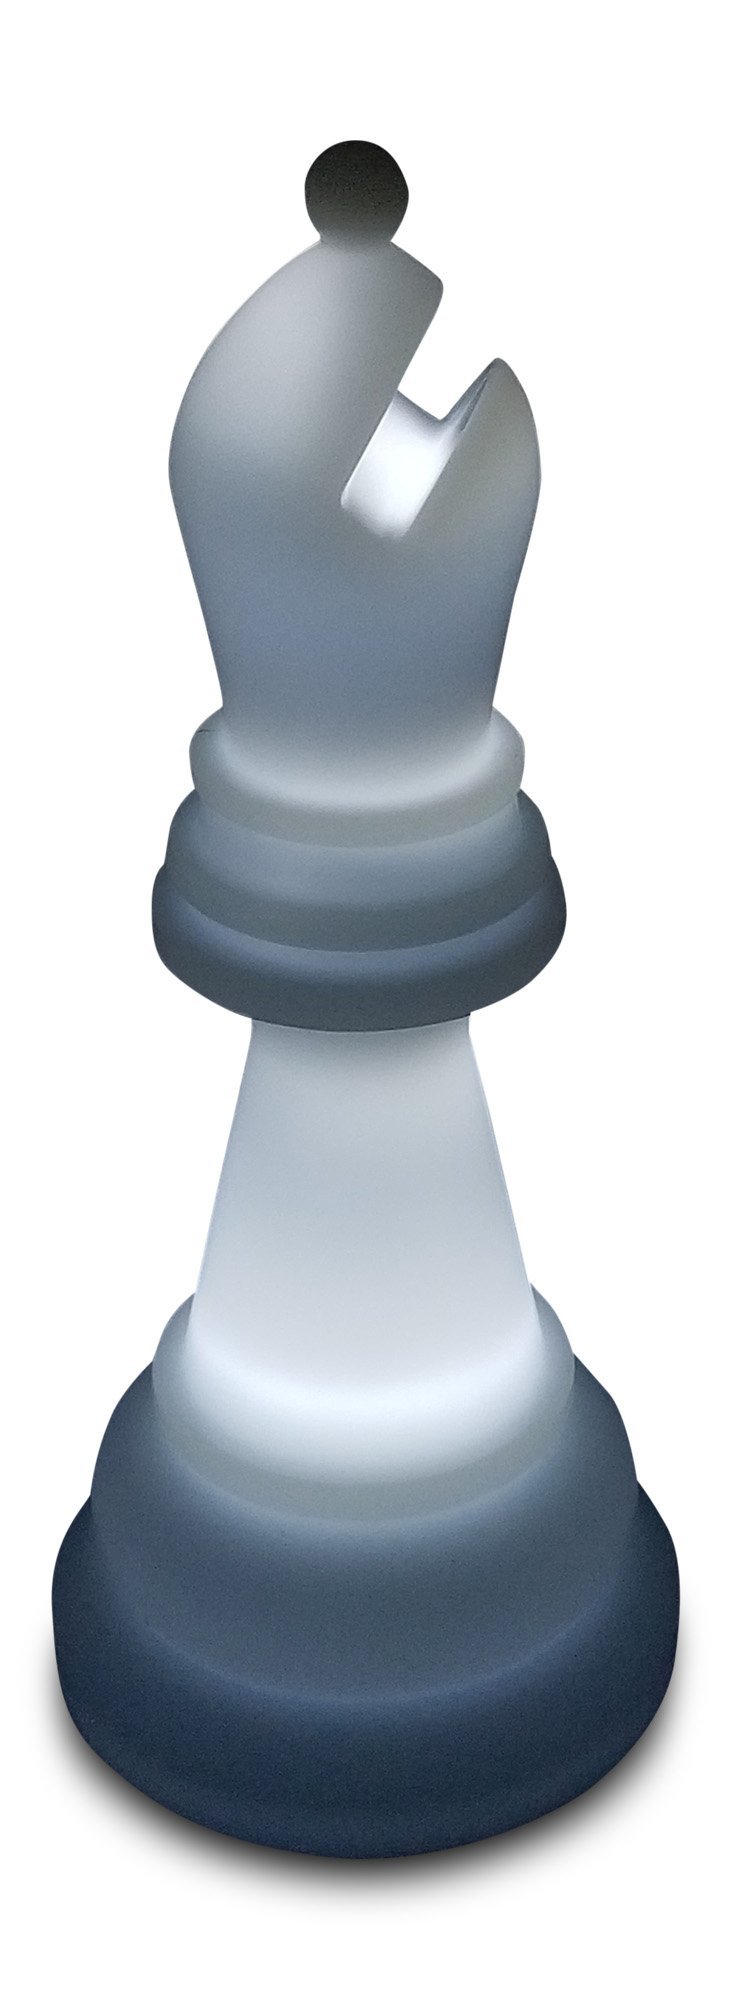 MegaChess 28 Inch Premium Plastic Bishop Light-Up Giant Chess Piece - White | Default Title | GiantChessUSA